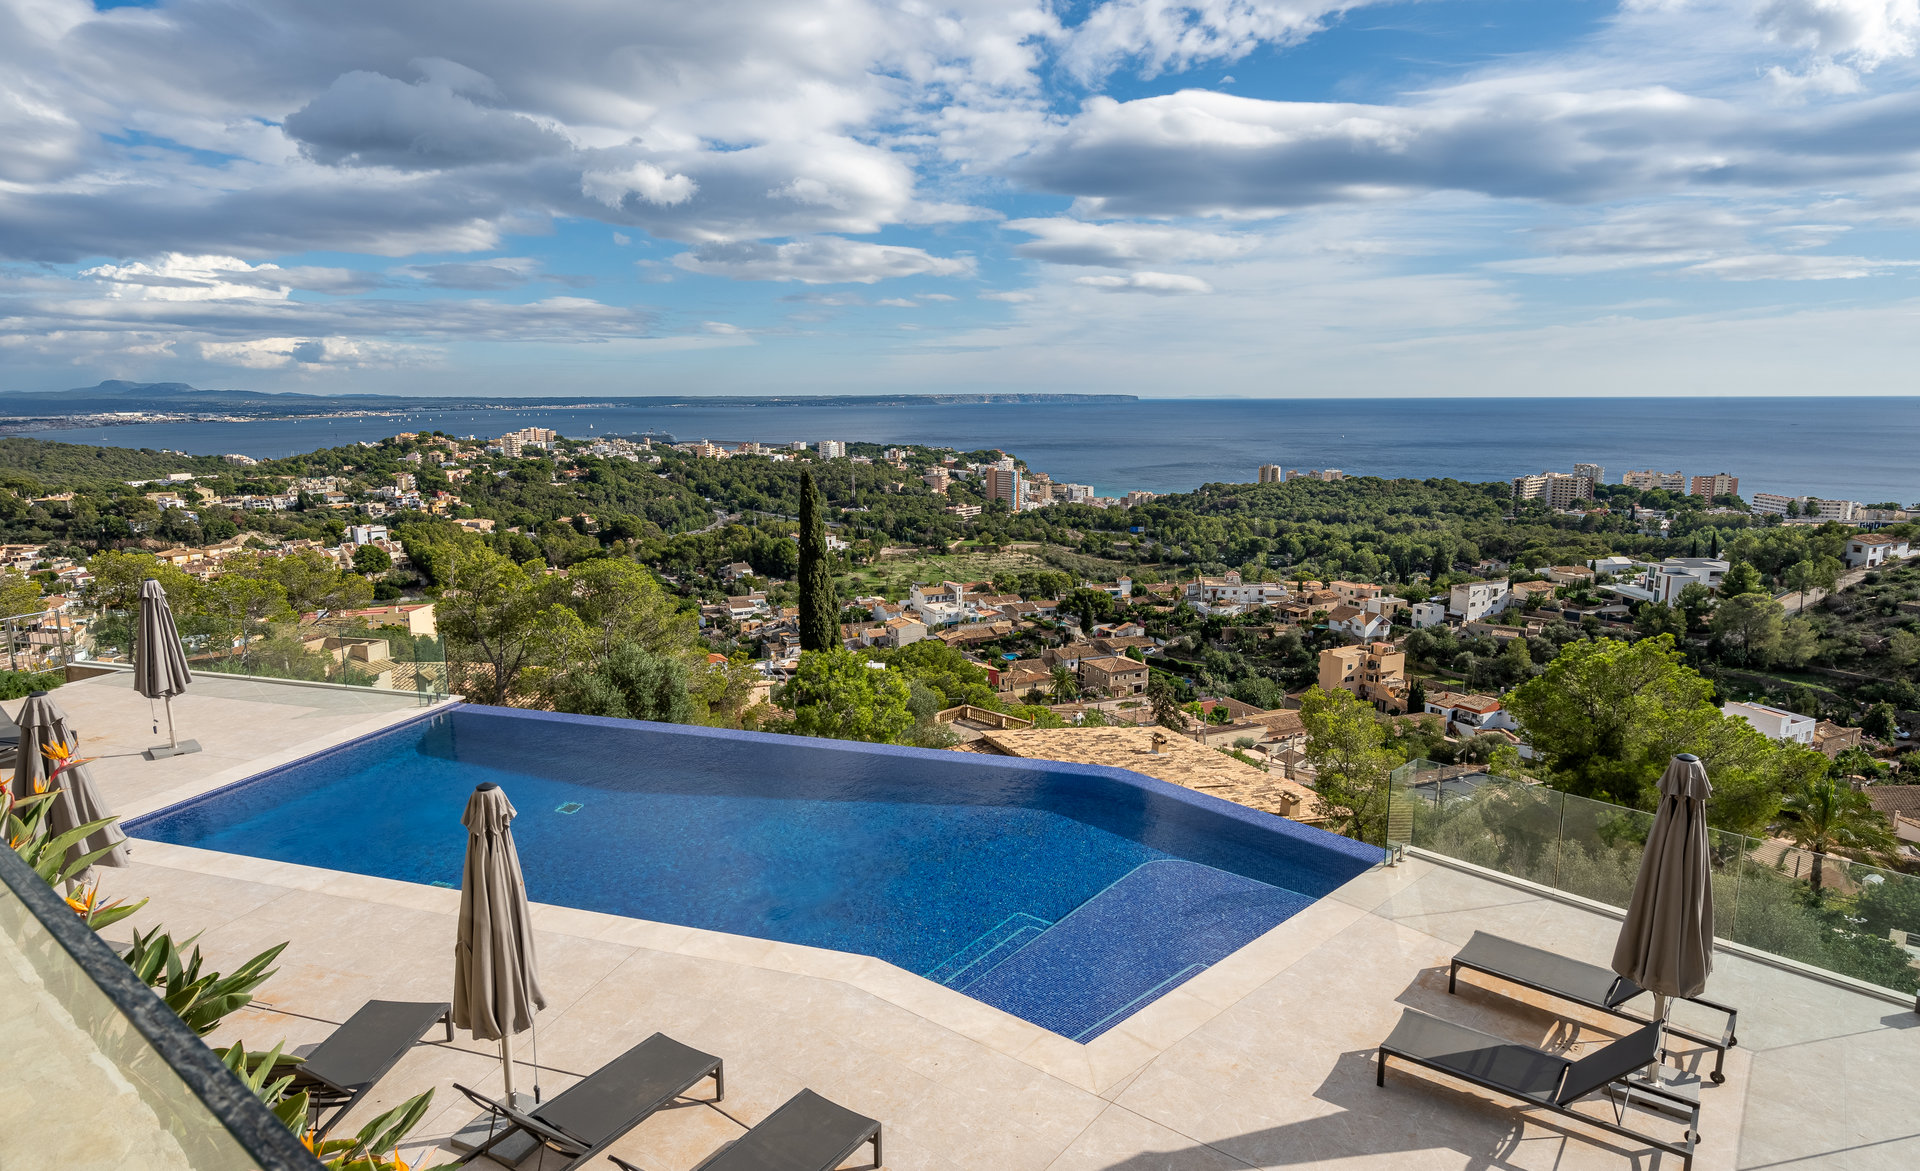 Best Apartments In Palma De Mallorca Spain for Rent